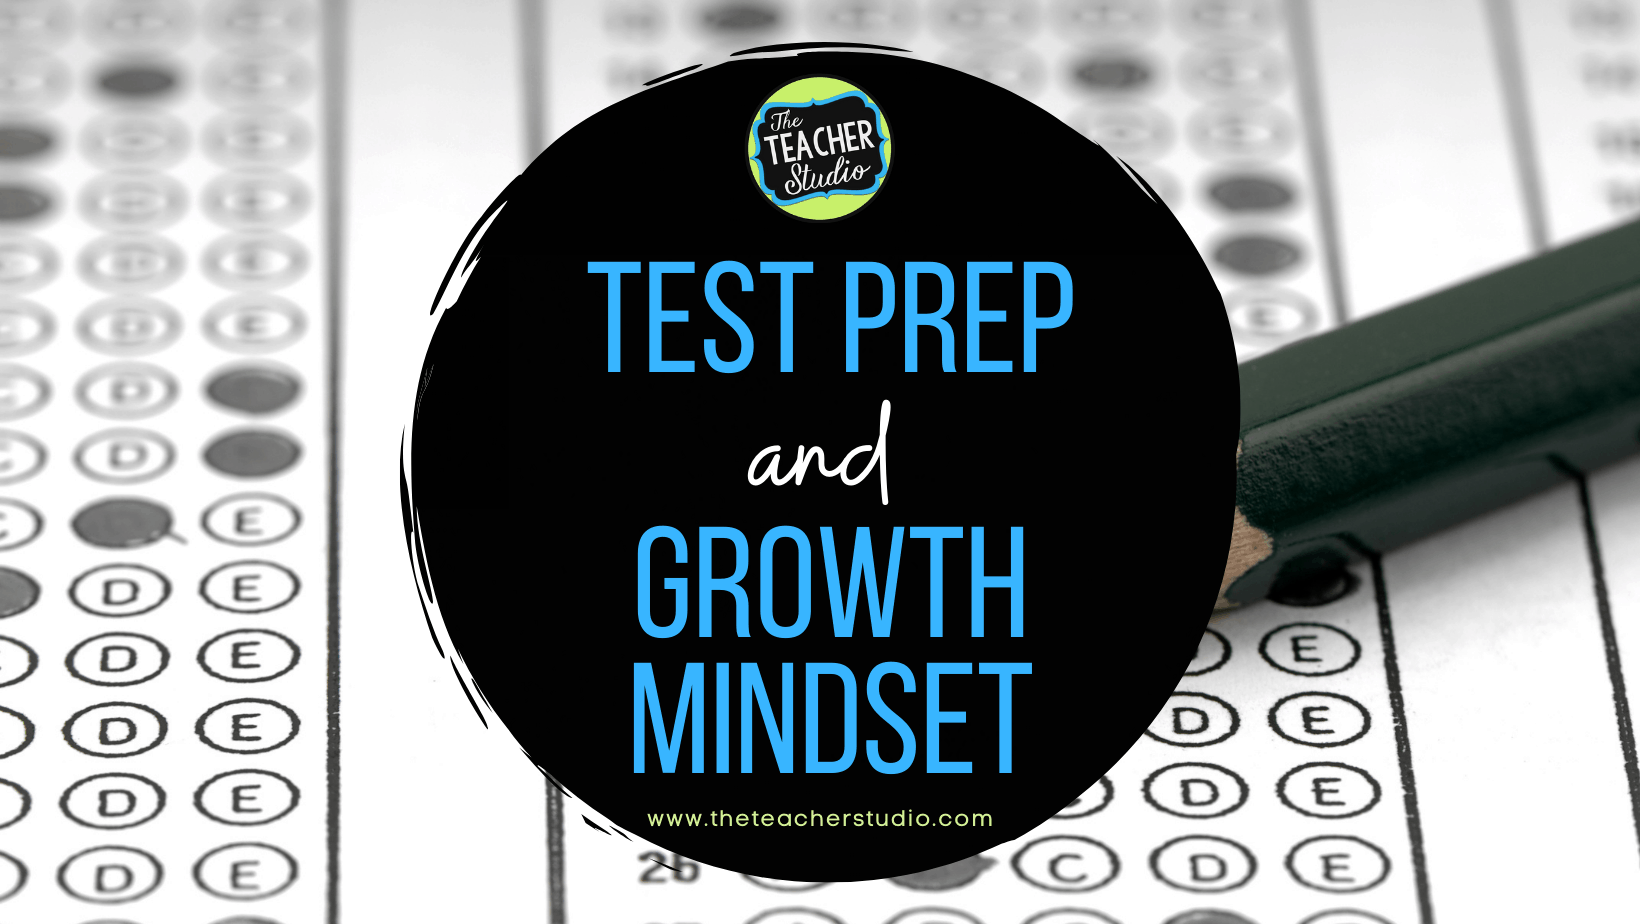 Growth mindset and test prep ideas